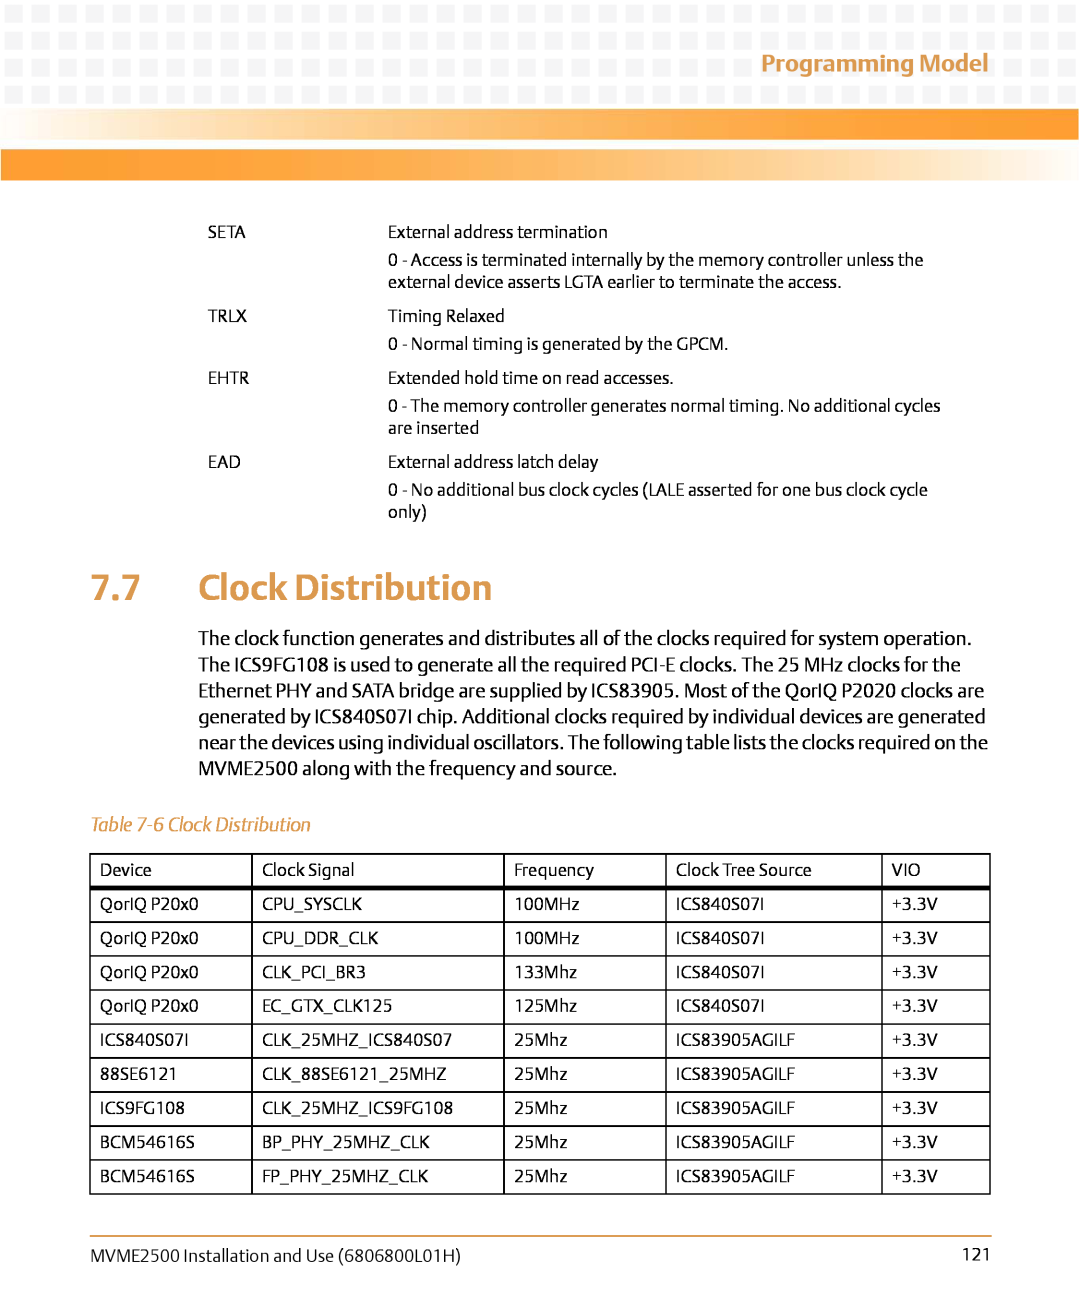 Emerson MVME2500 manual 6 Clock Distribution, Programming Model 